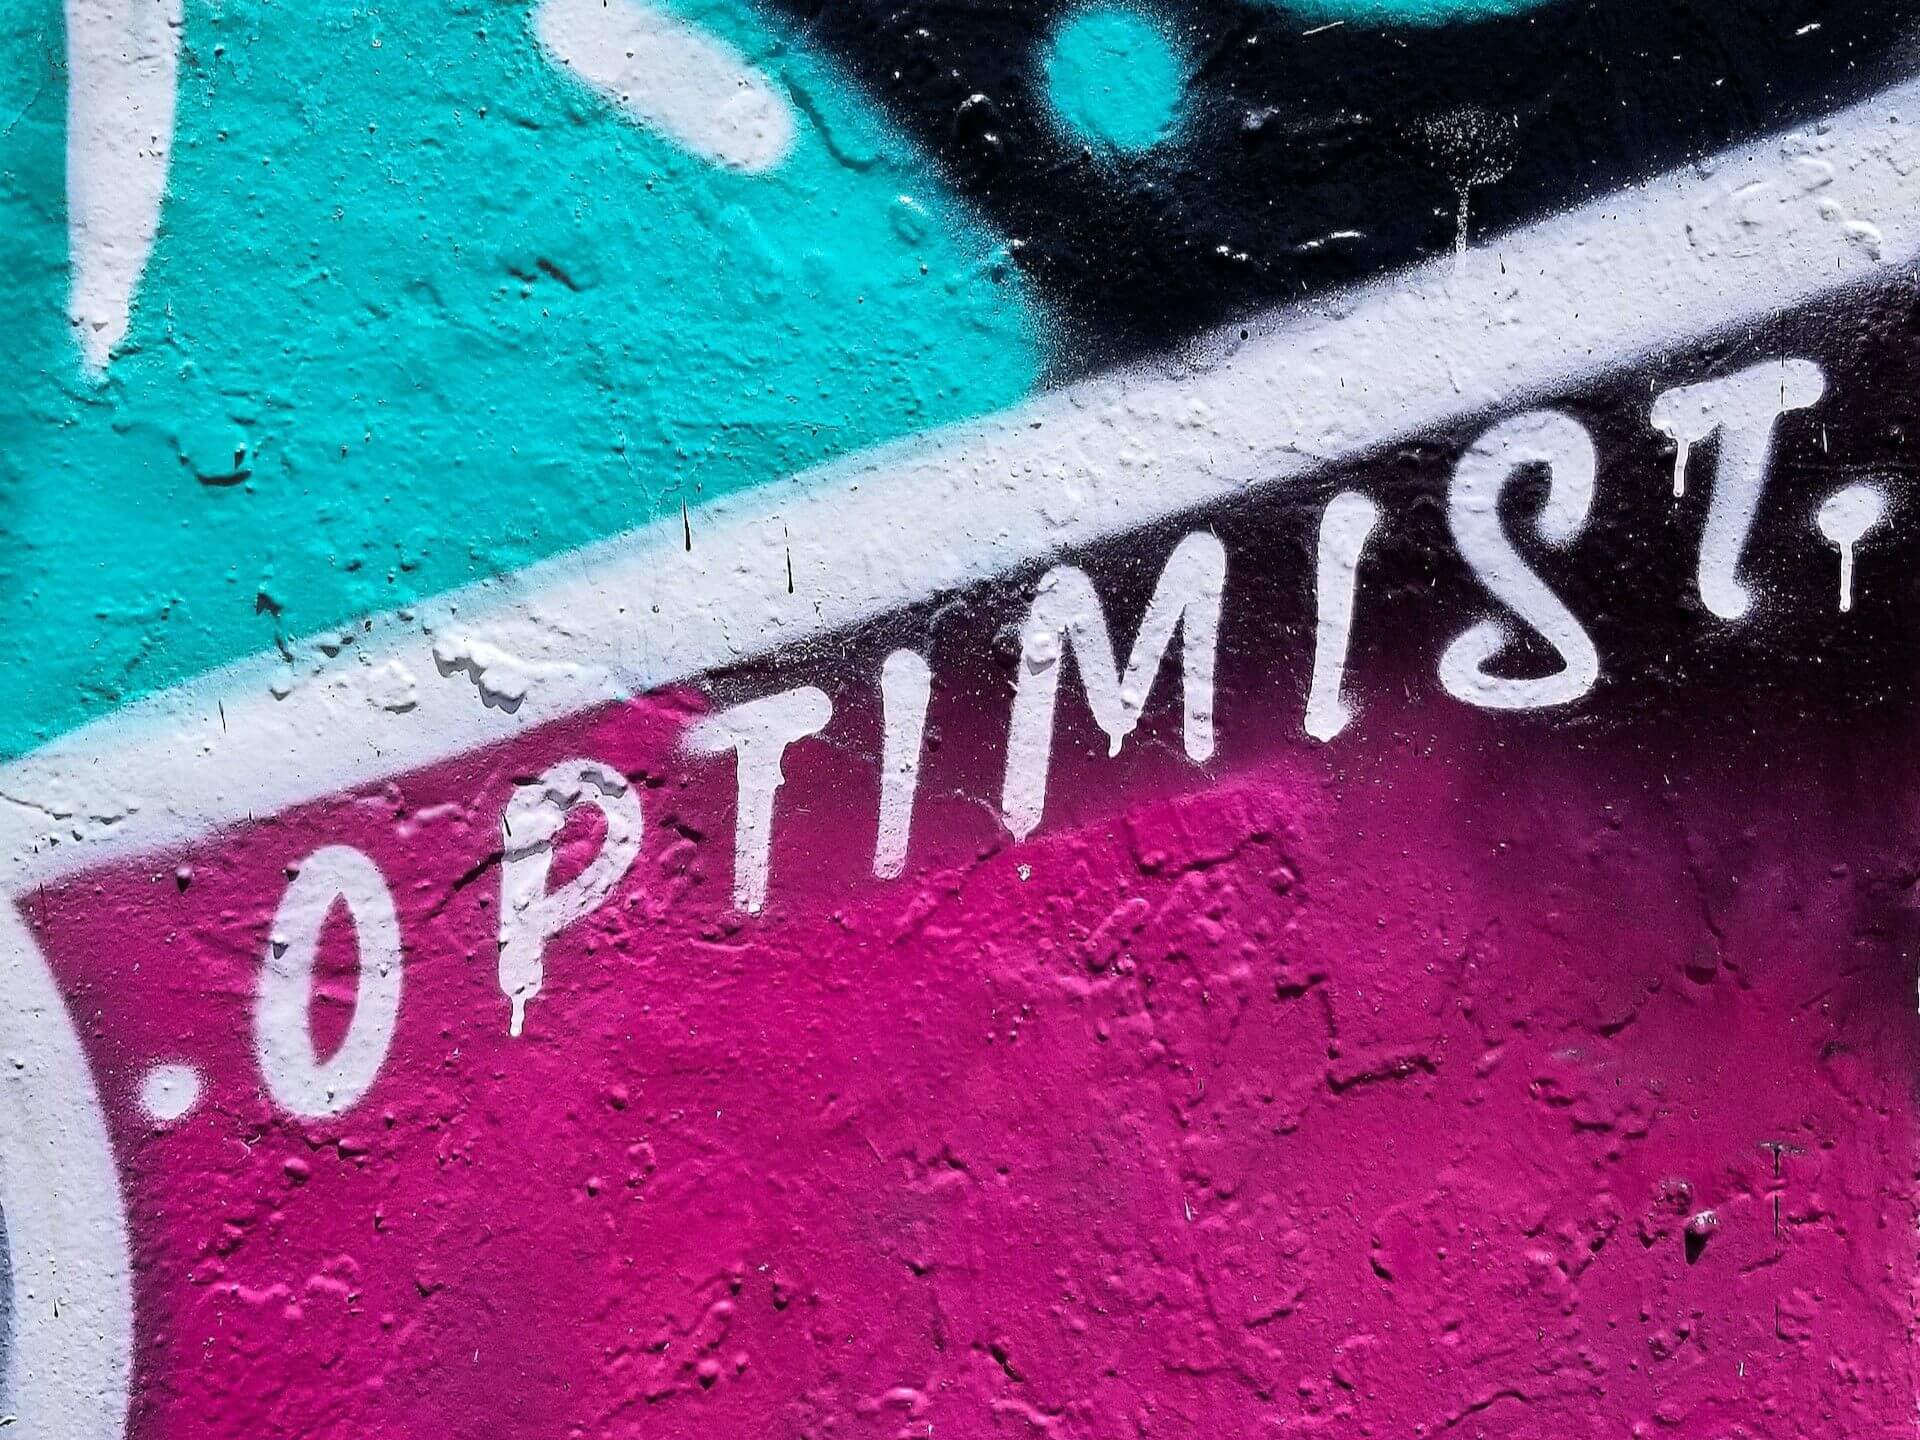 "Optimist" graffiti